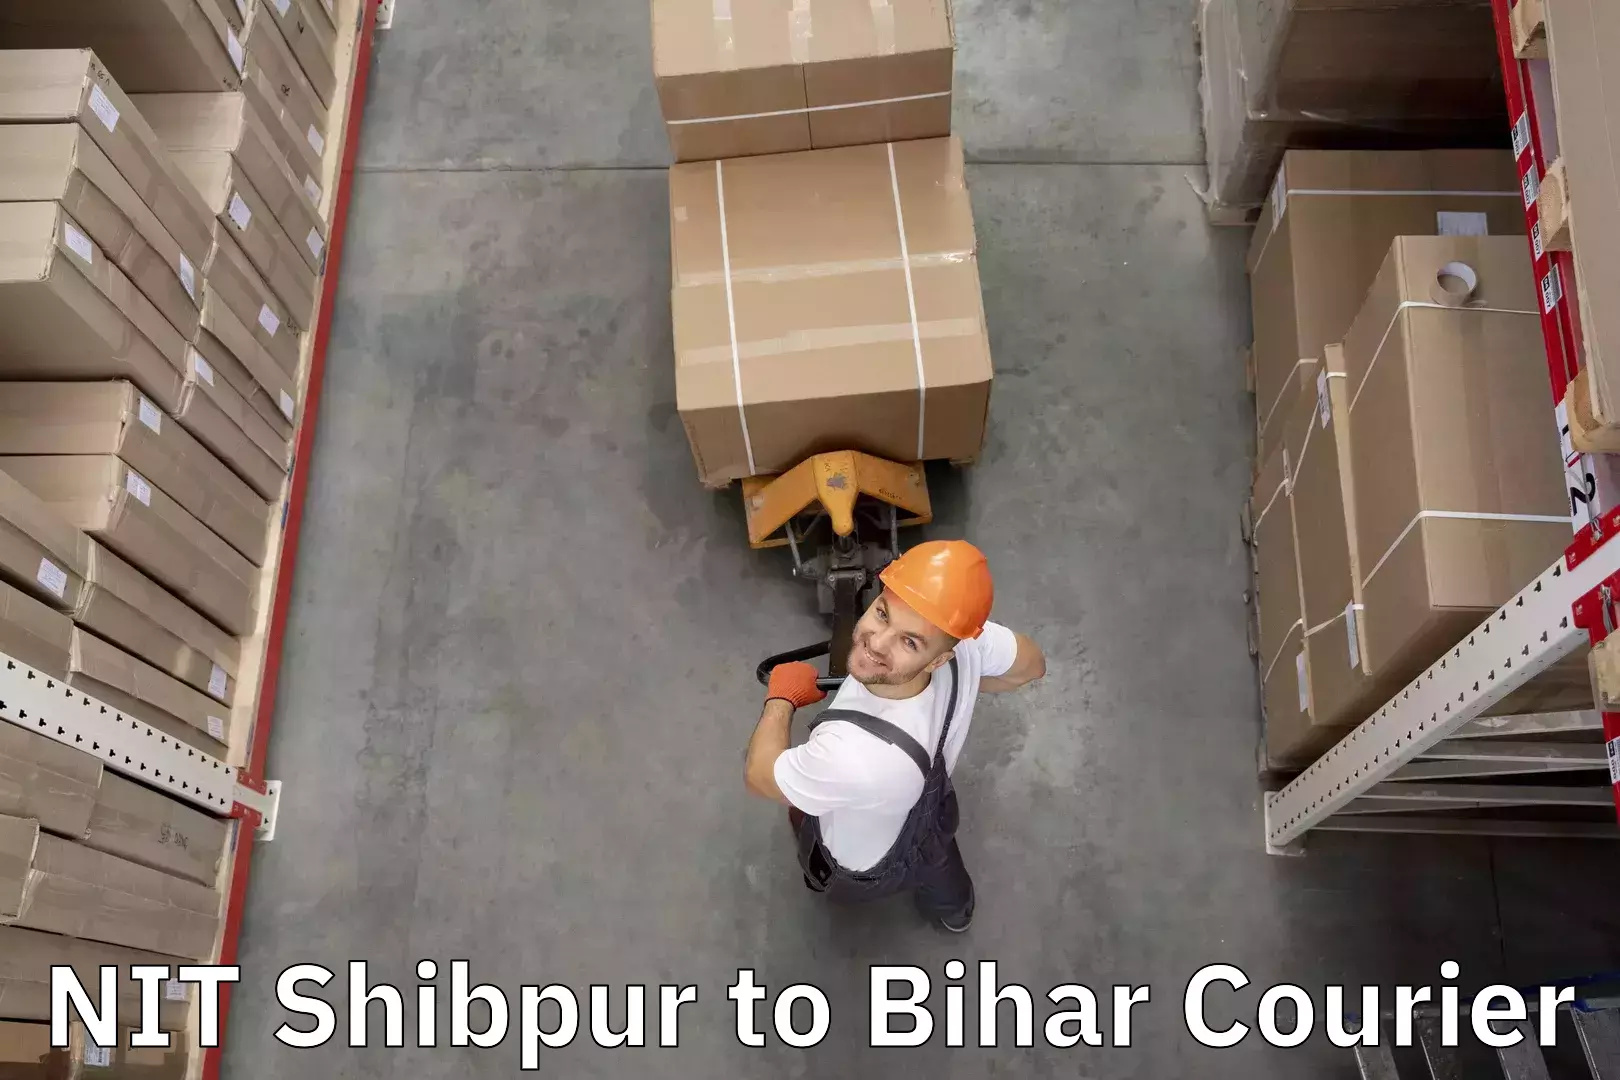 Baggage relocation service NIT Shibpur to Bihar